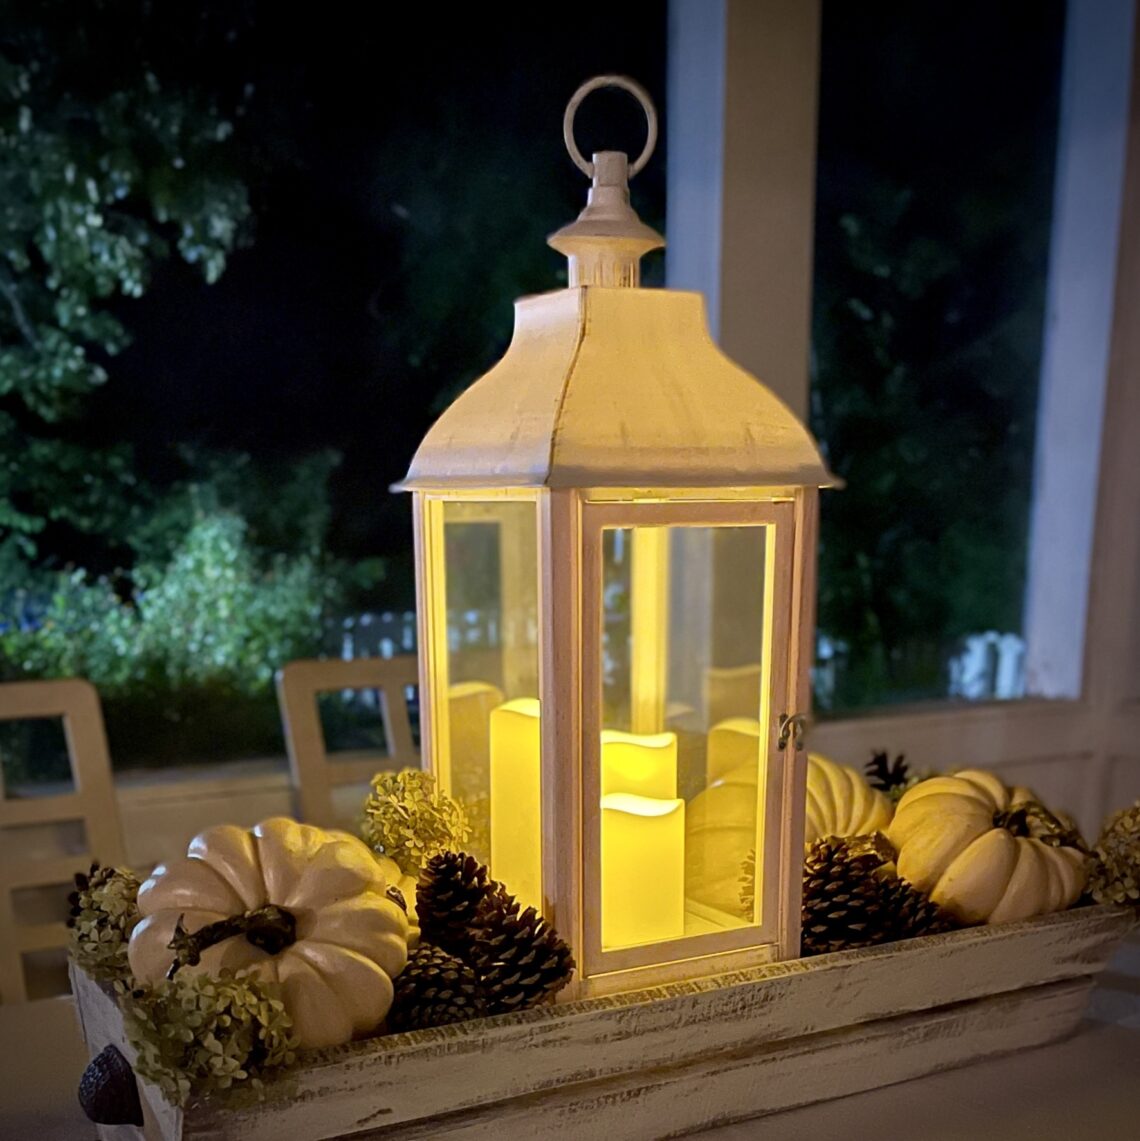 Lantern with pumpkins in trough